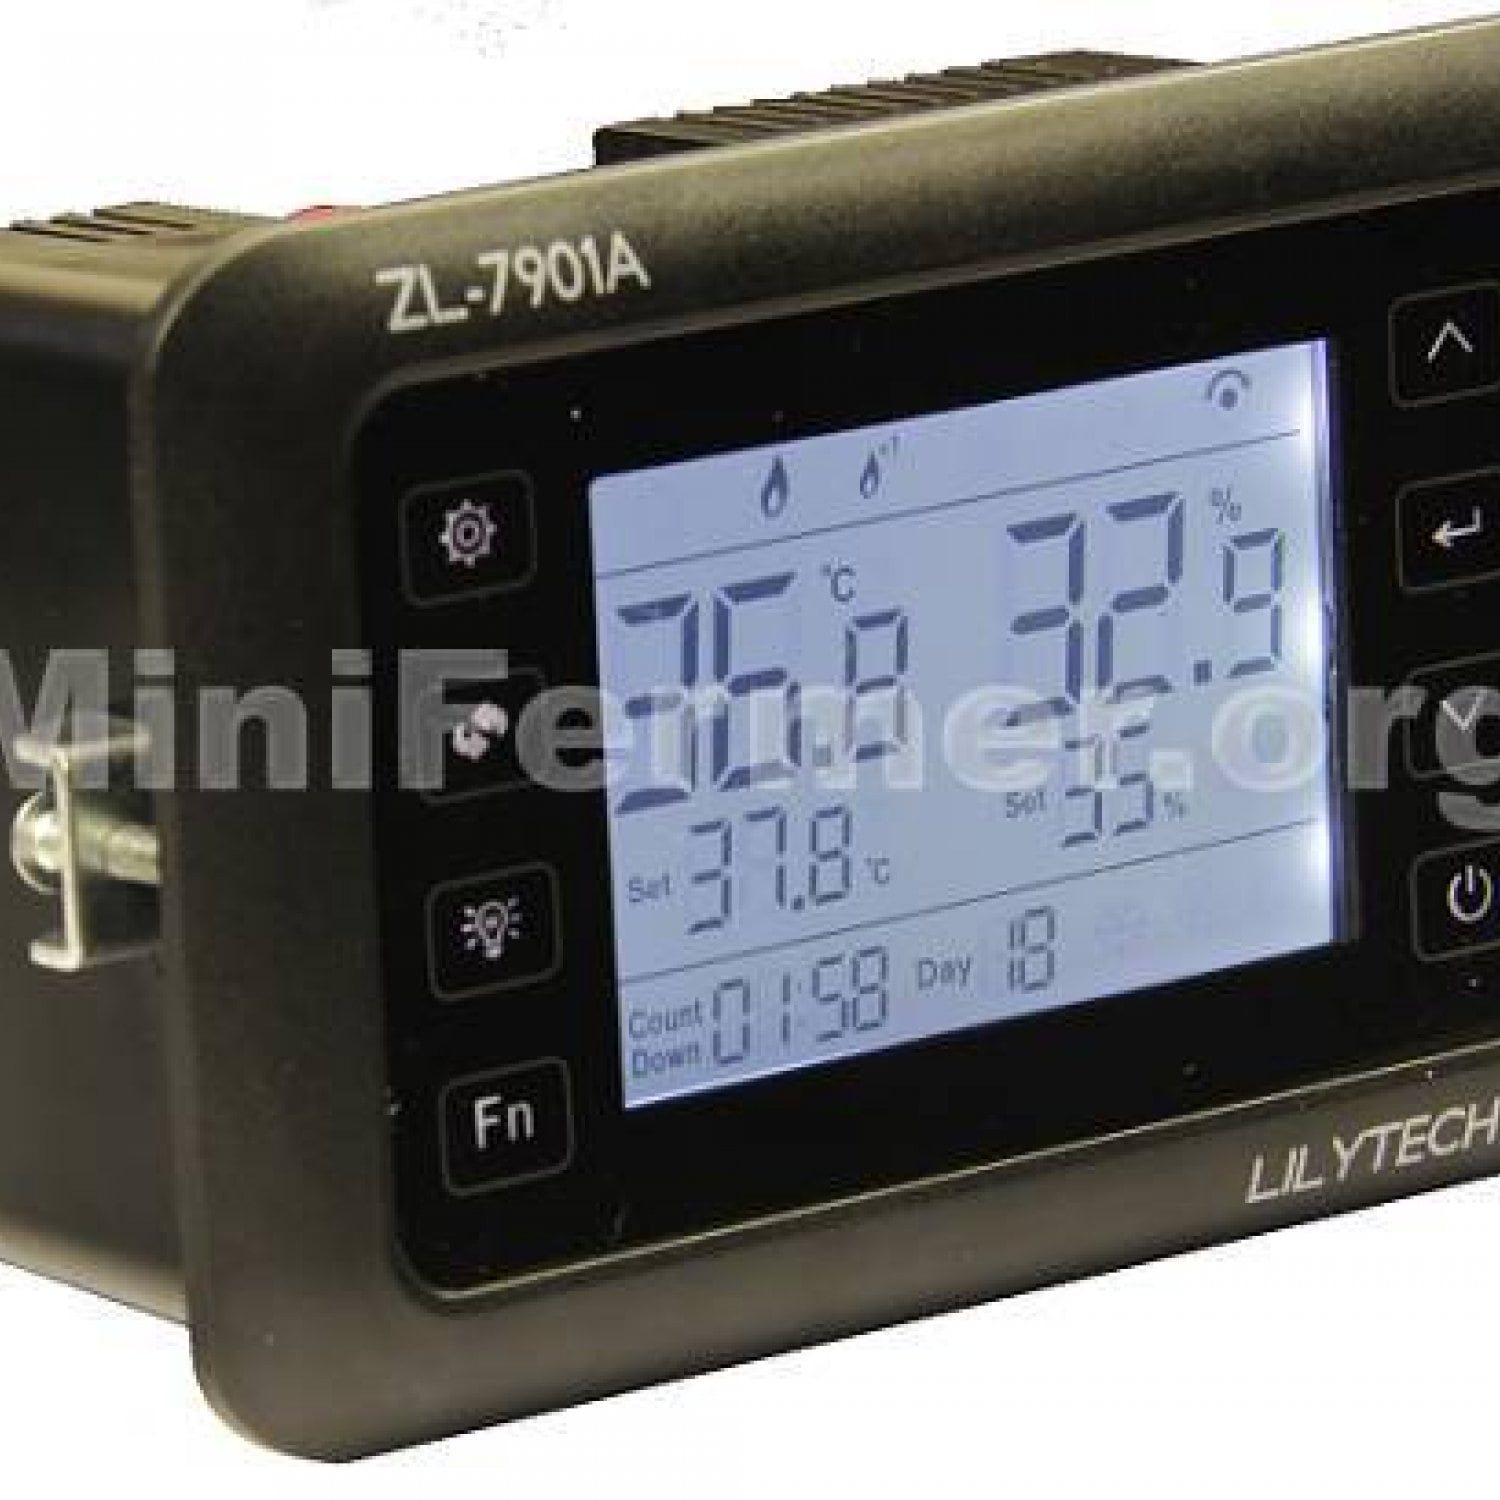 Контроллер  LILYTECH ZL-7901A (темп + влажность + 3 таймера)